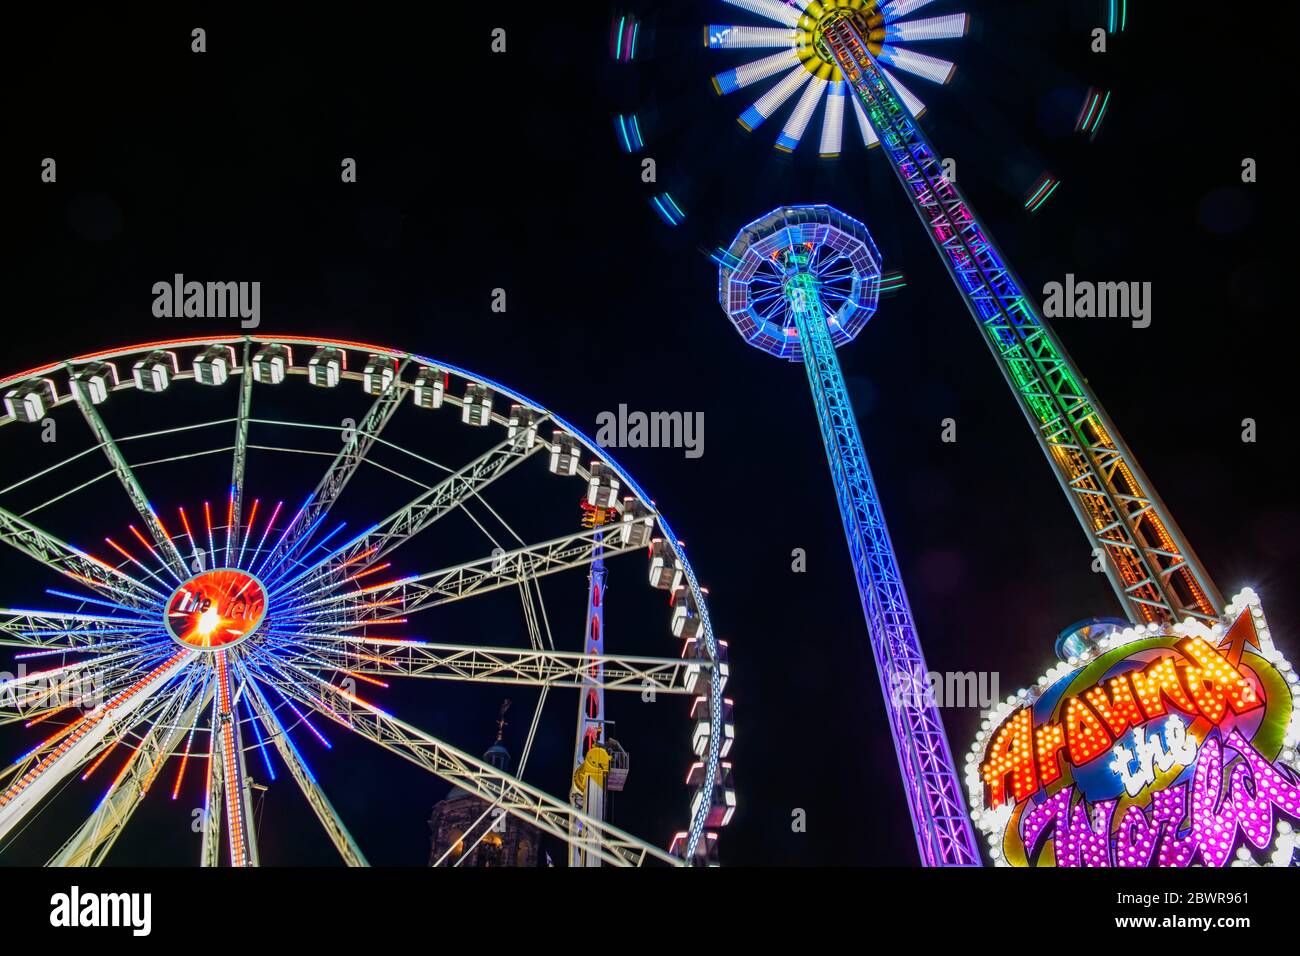 Dam Square Fun Fair Carnival rides at night, Amsterdam, North Holland, Netherlands. Stock Photo